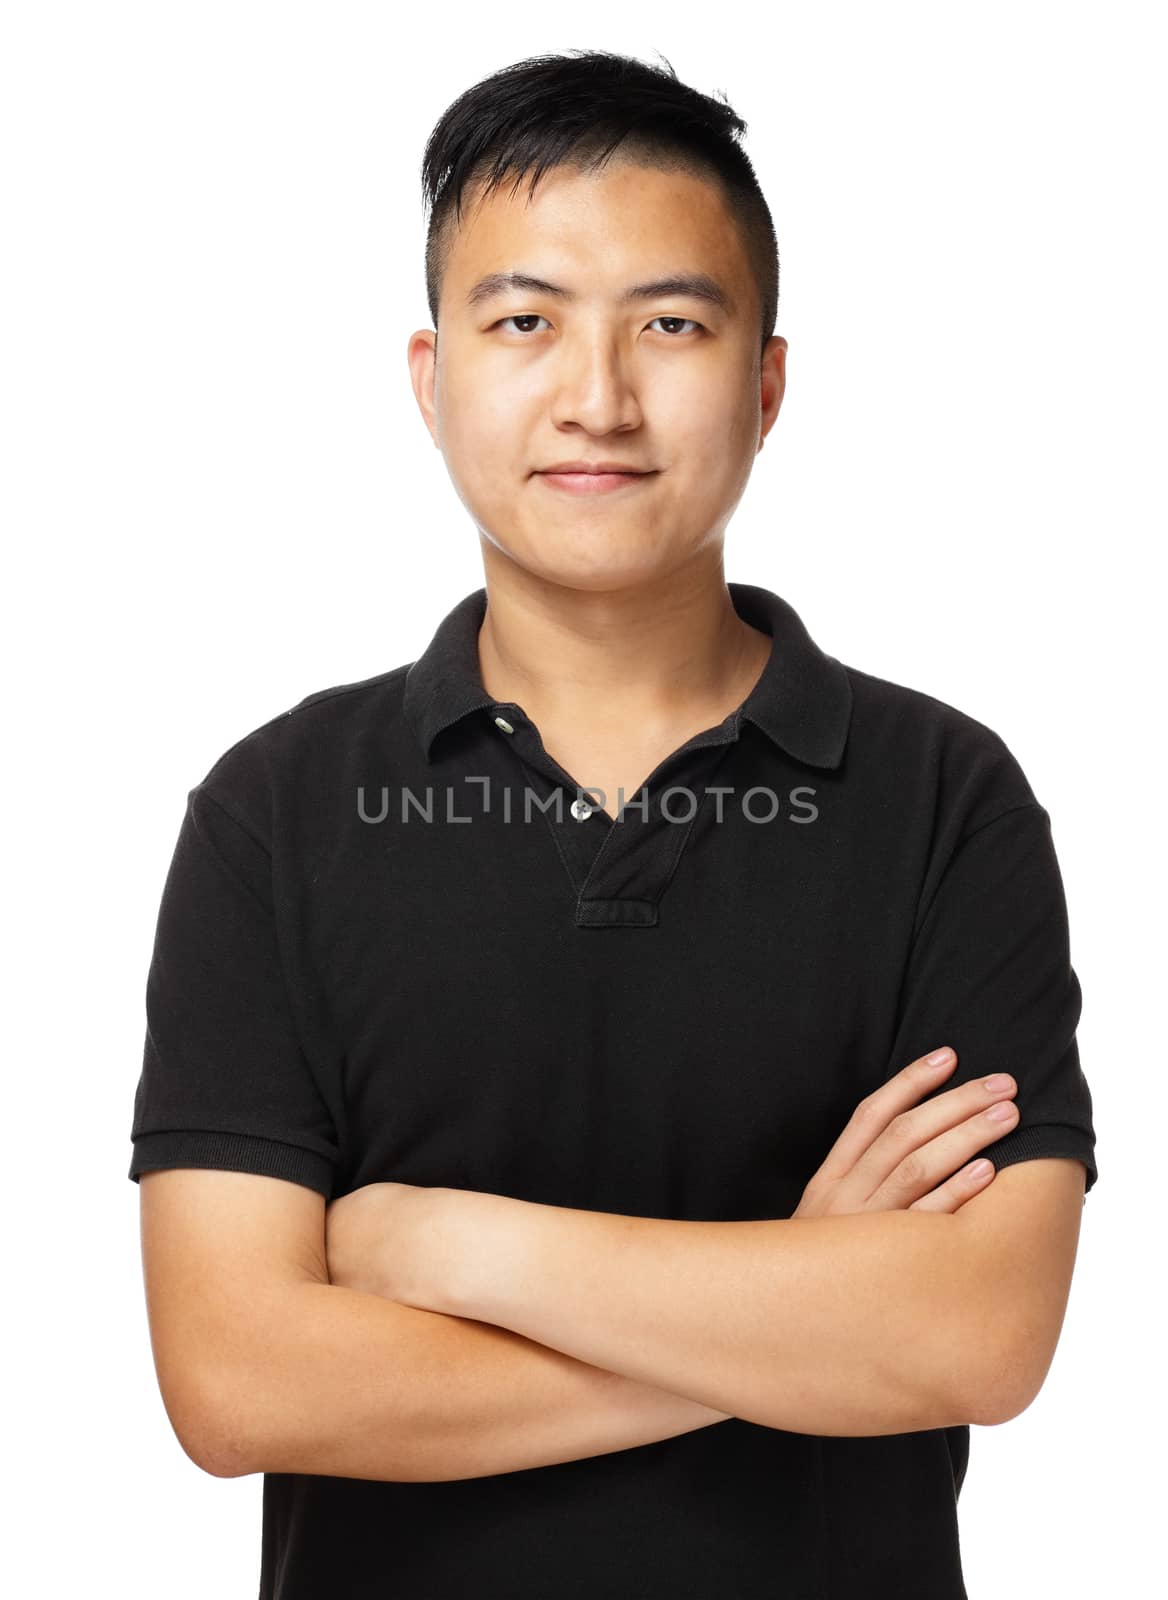 Asian man portrait by leungchopan